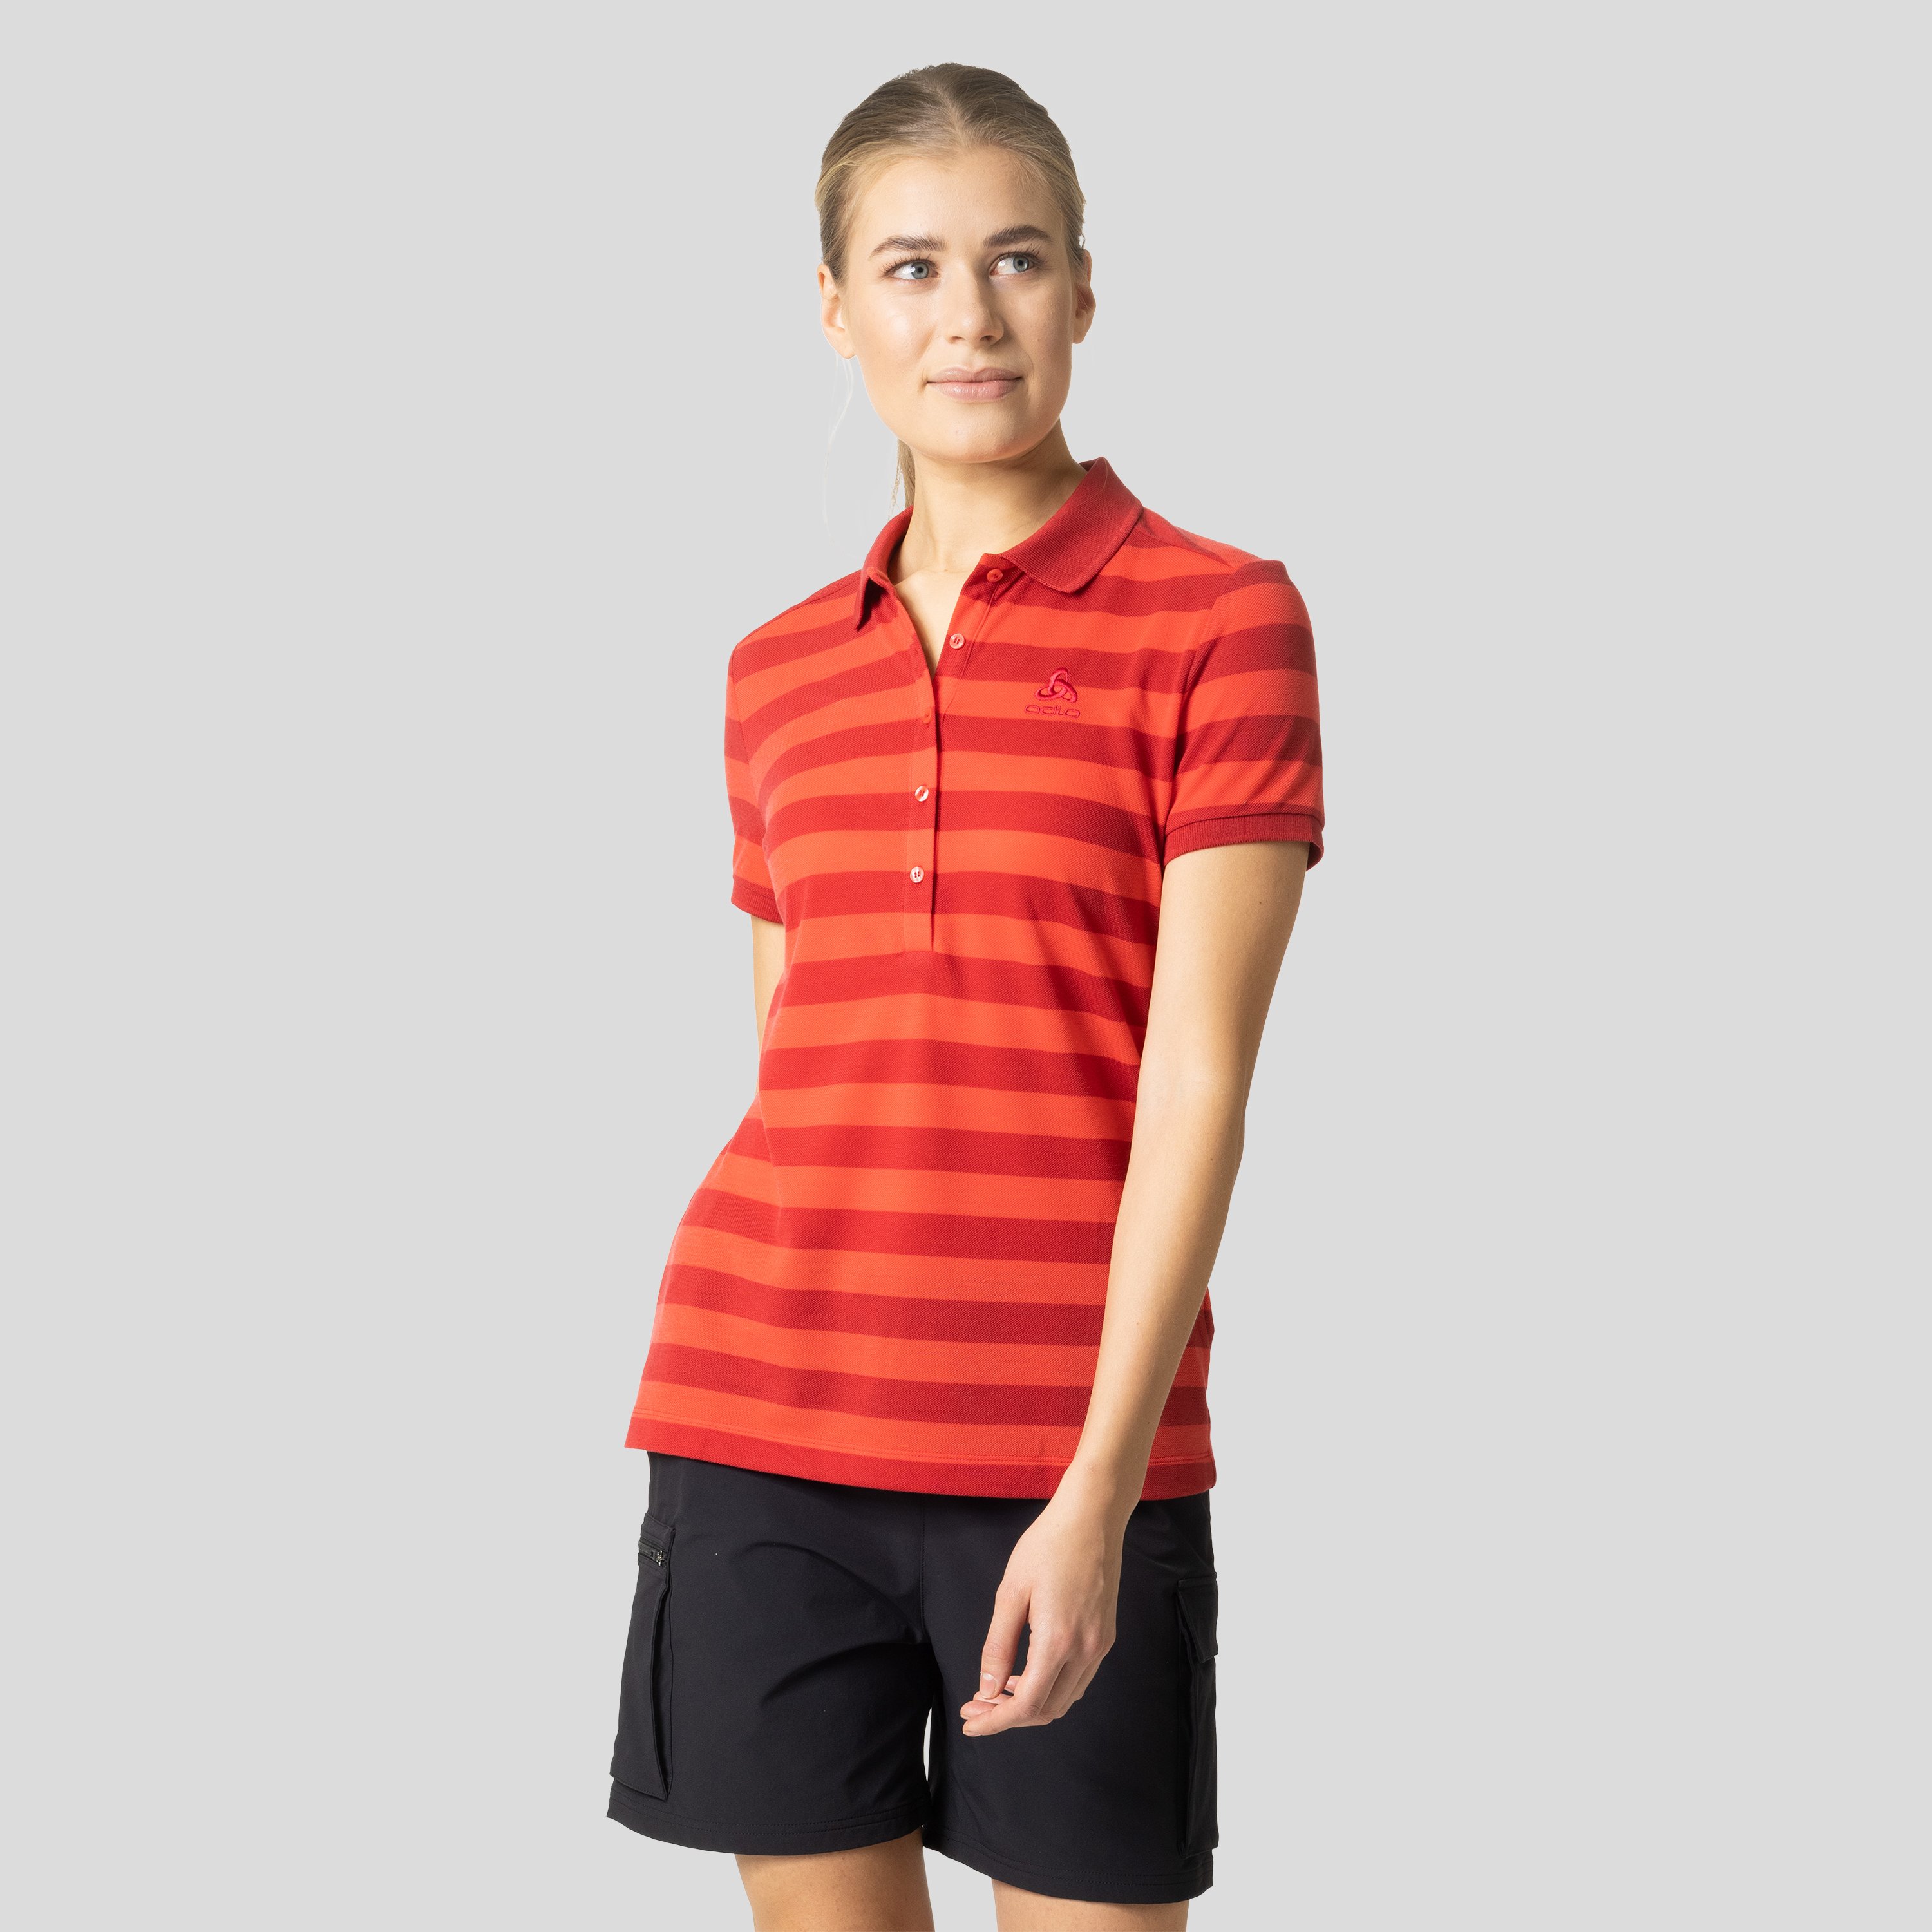 ODLO Concord Poloshirt für Damen, XS, rot